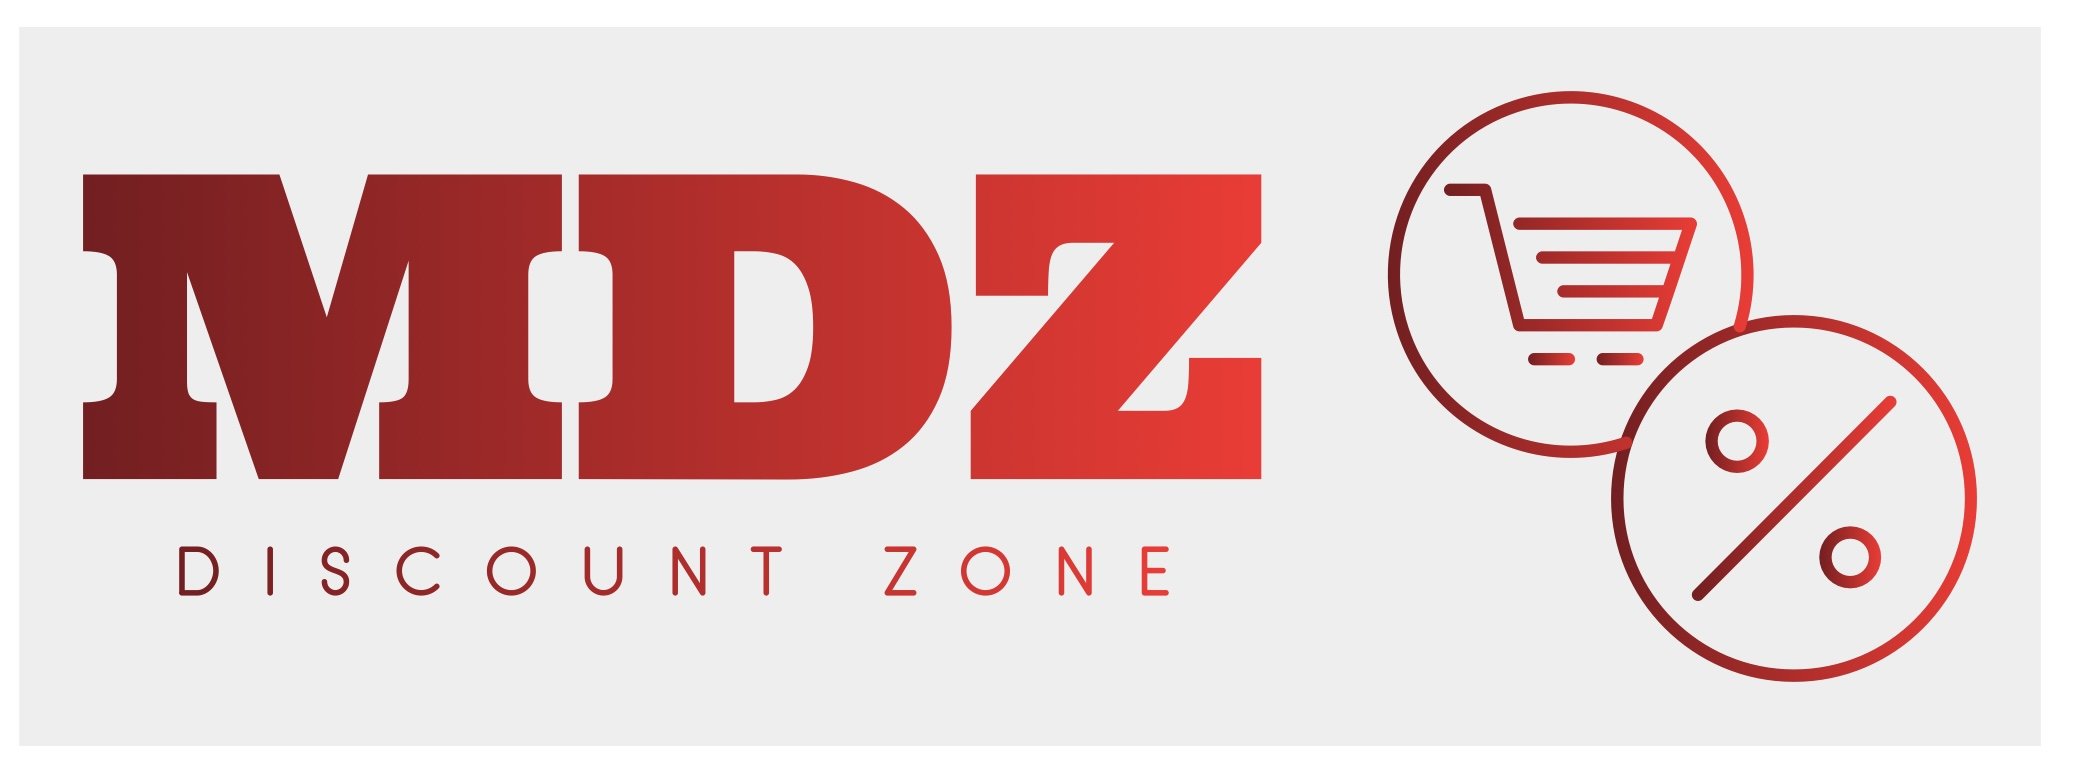 MDZ Logo.jpg